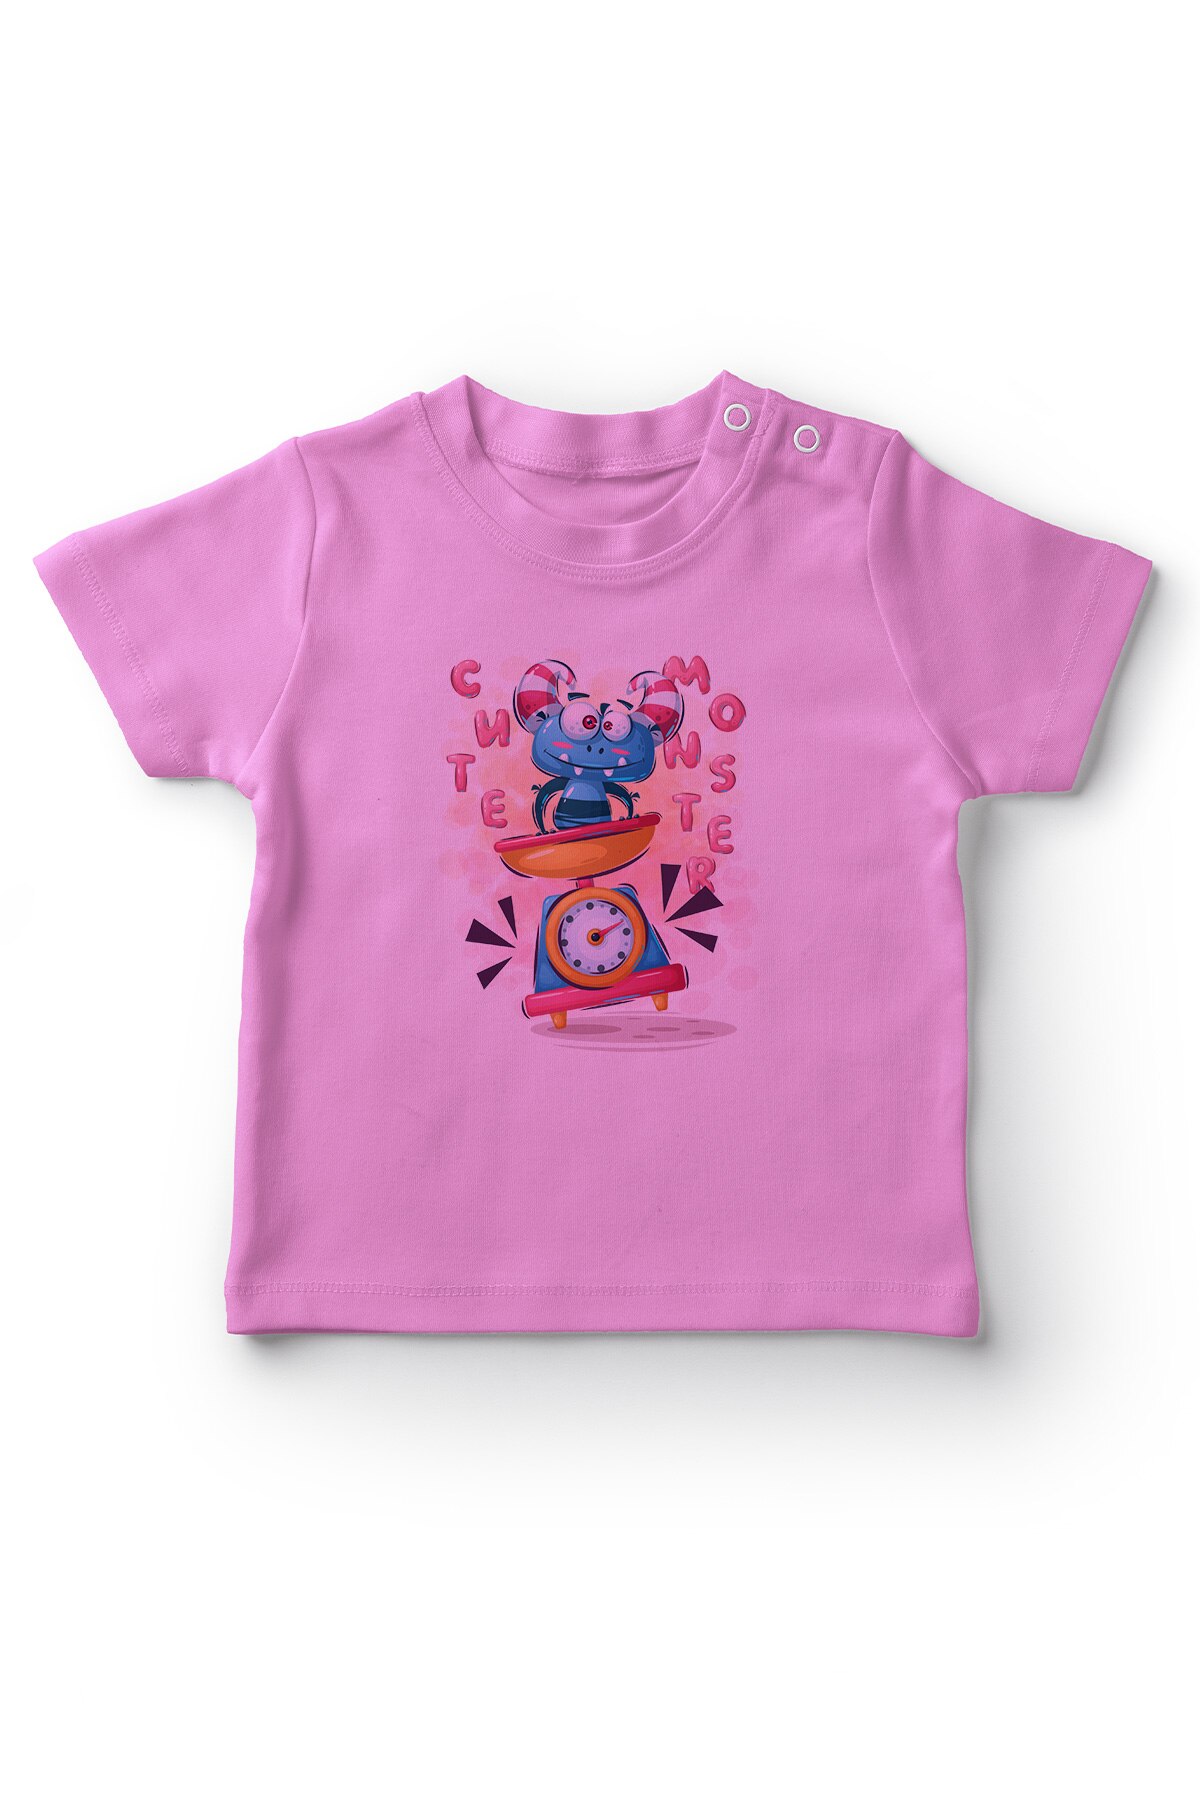 Angemiel Baby Klok Üzerideki Zoete Monster Meisje Baby T-shirt Roze